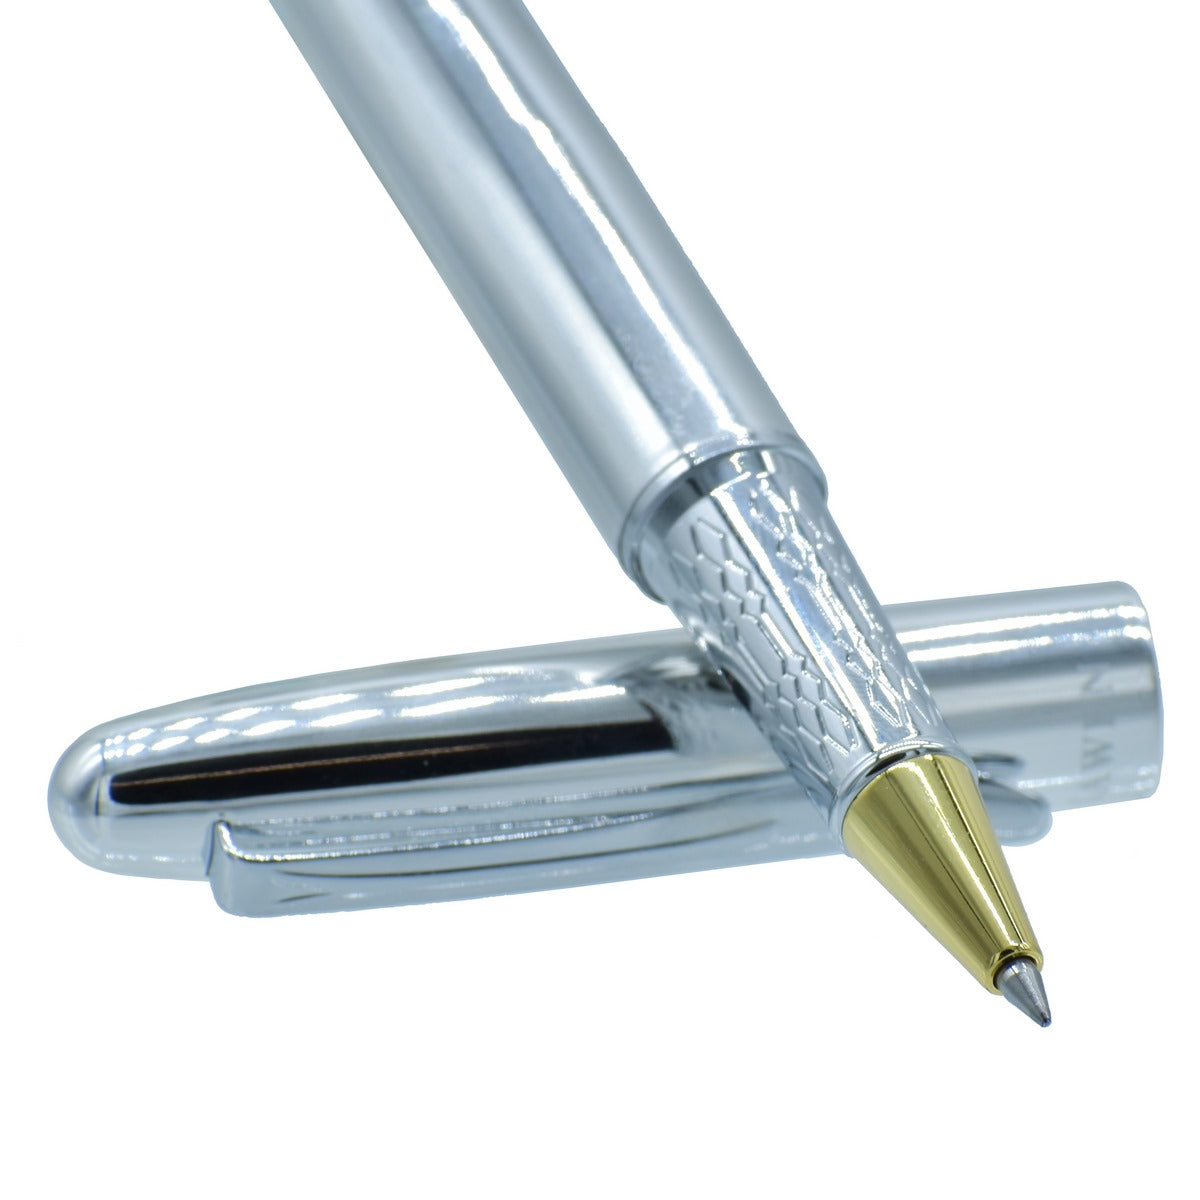 jags-mumbai Roller Pens Roller Pen Gold and Silver